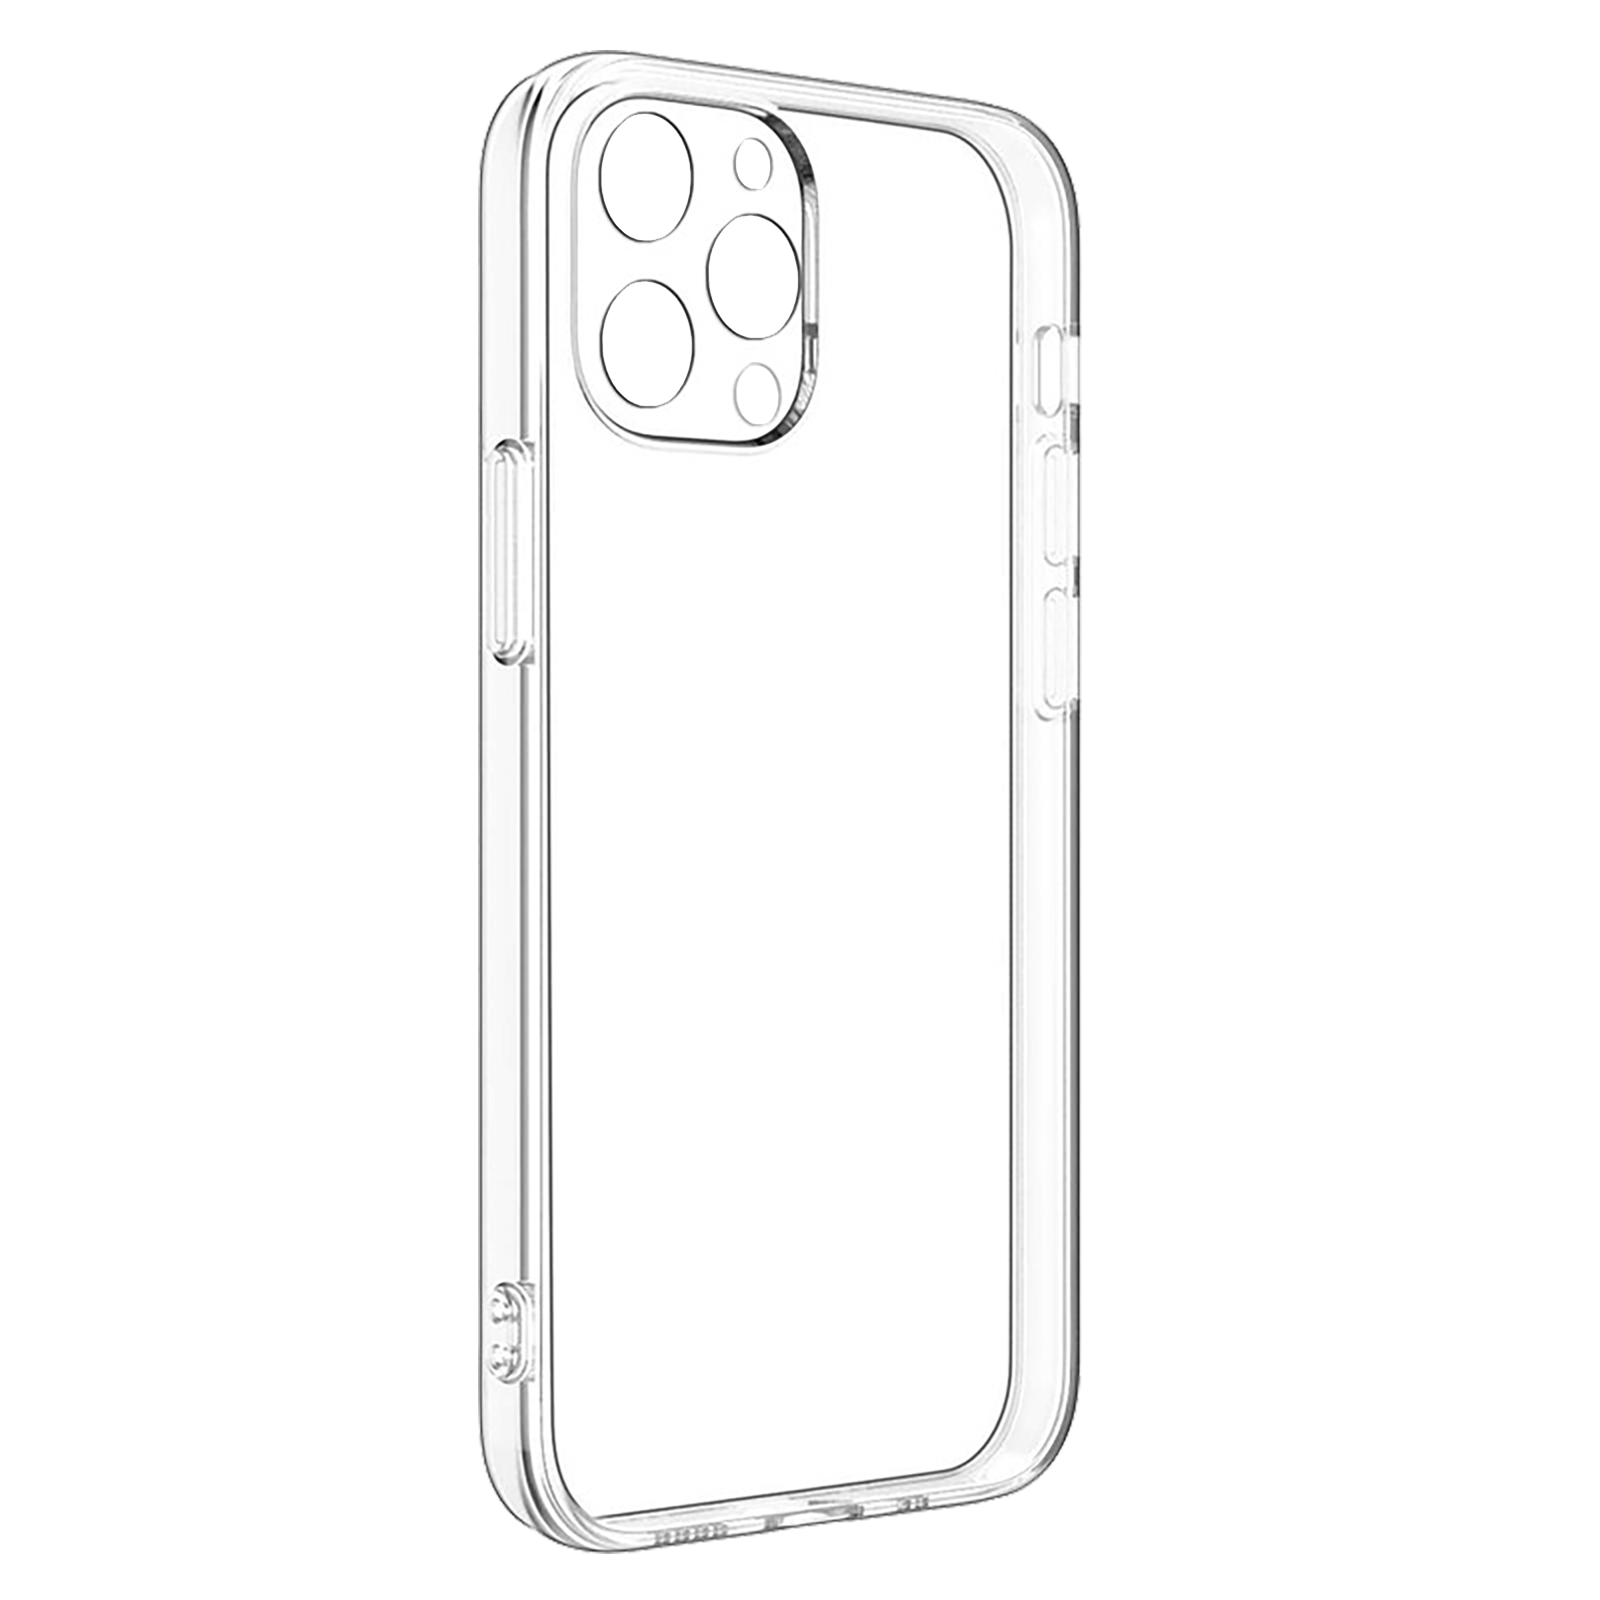 Vaku Luxos Silicon Back Case For iPhone 13 Pro (Scratch Resistant, VAKU-IPH13PR-SLFCLR, Clear)